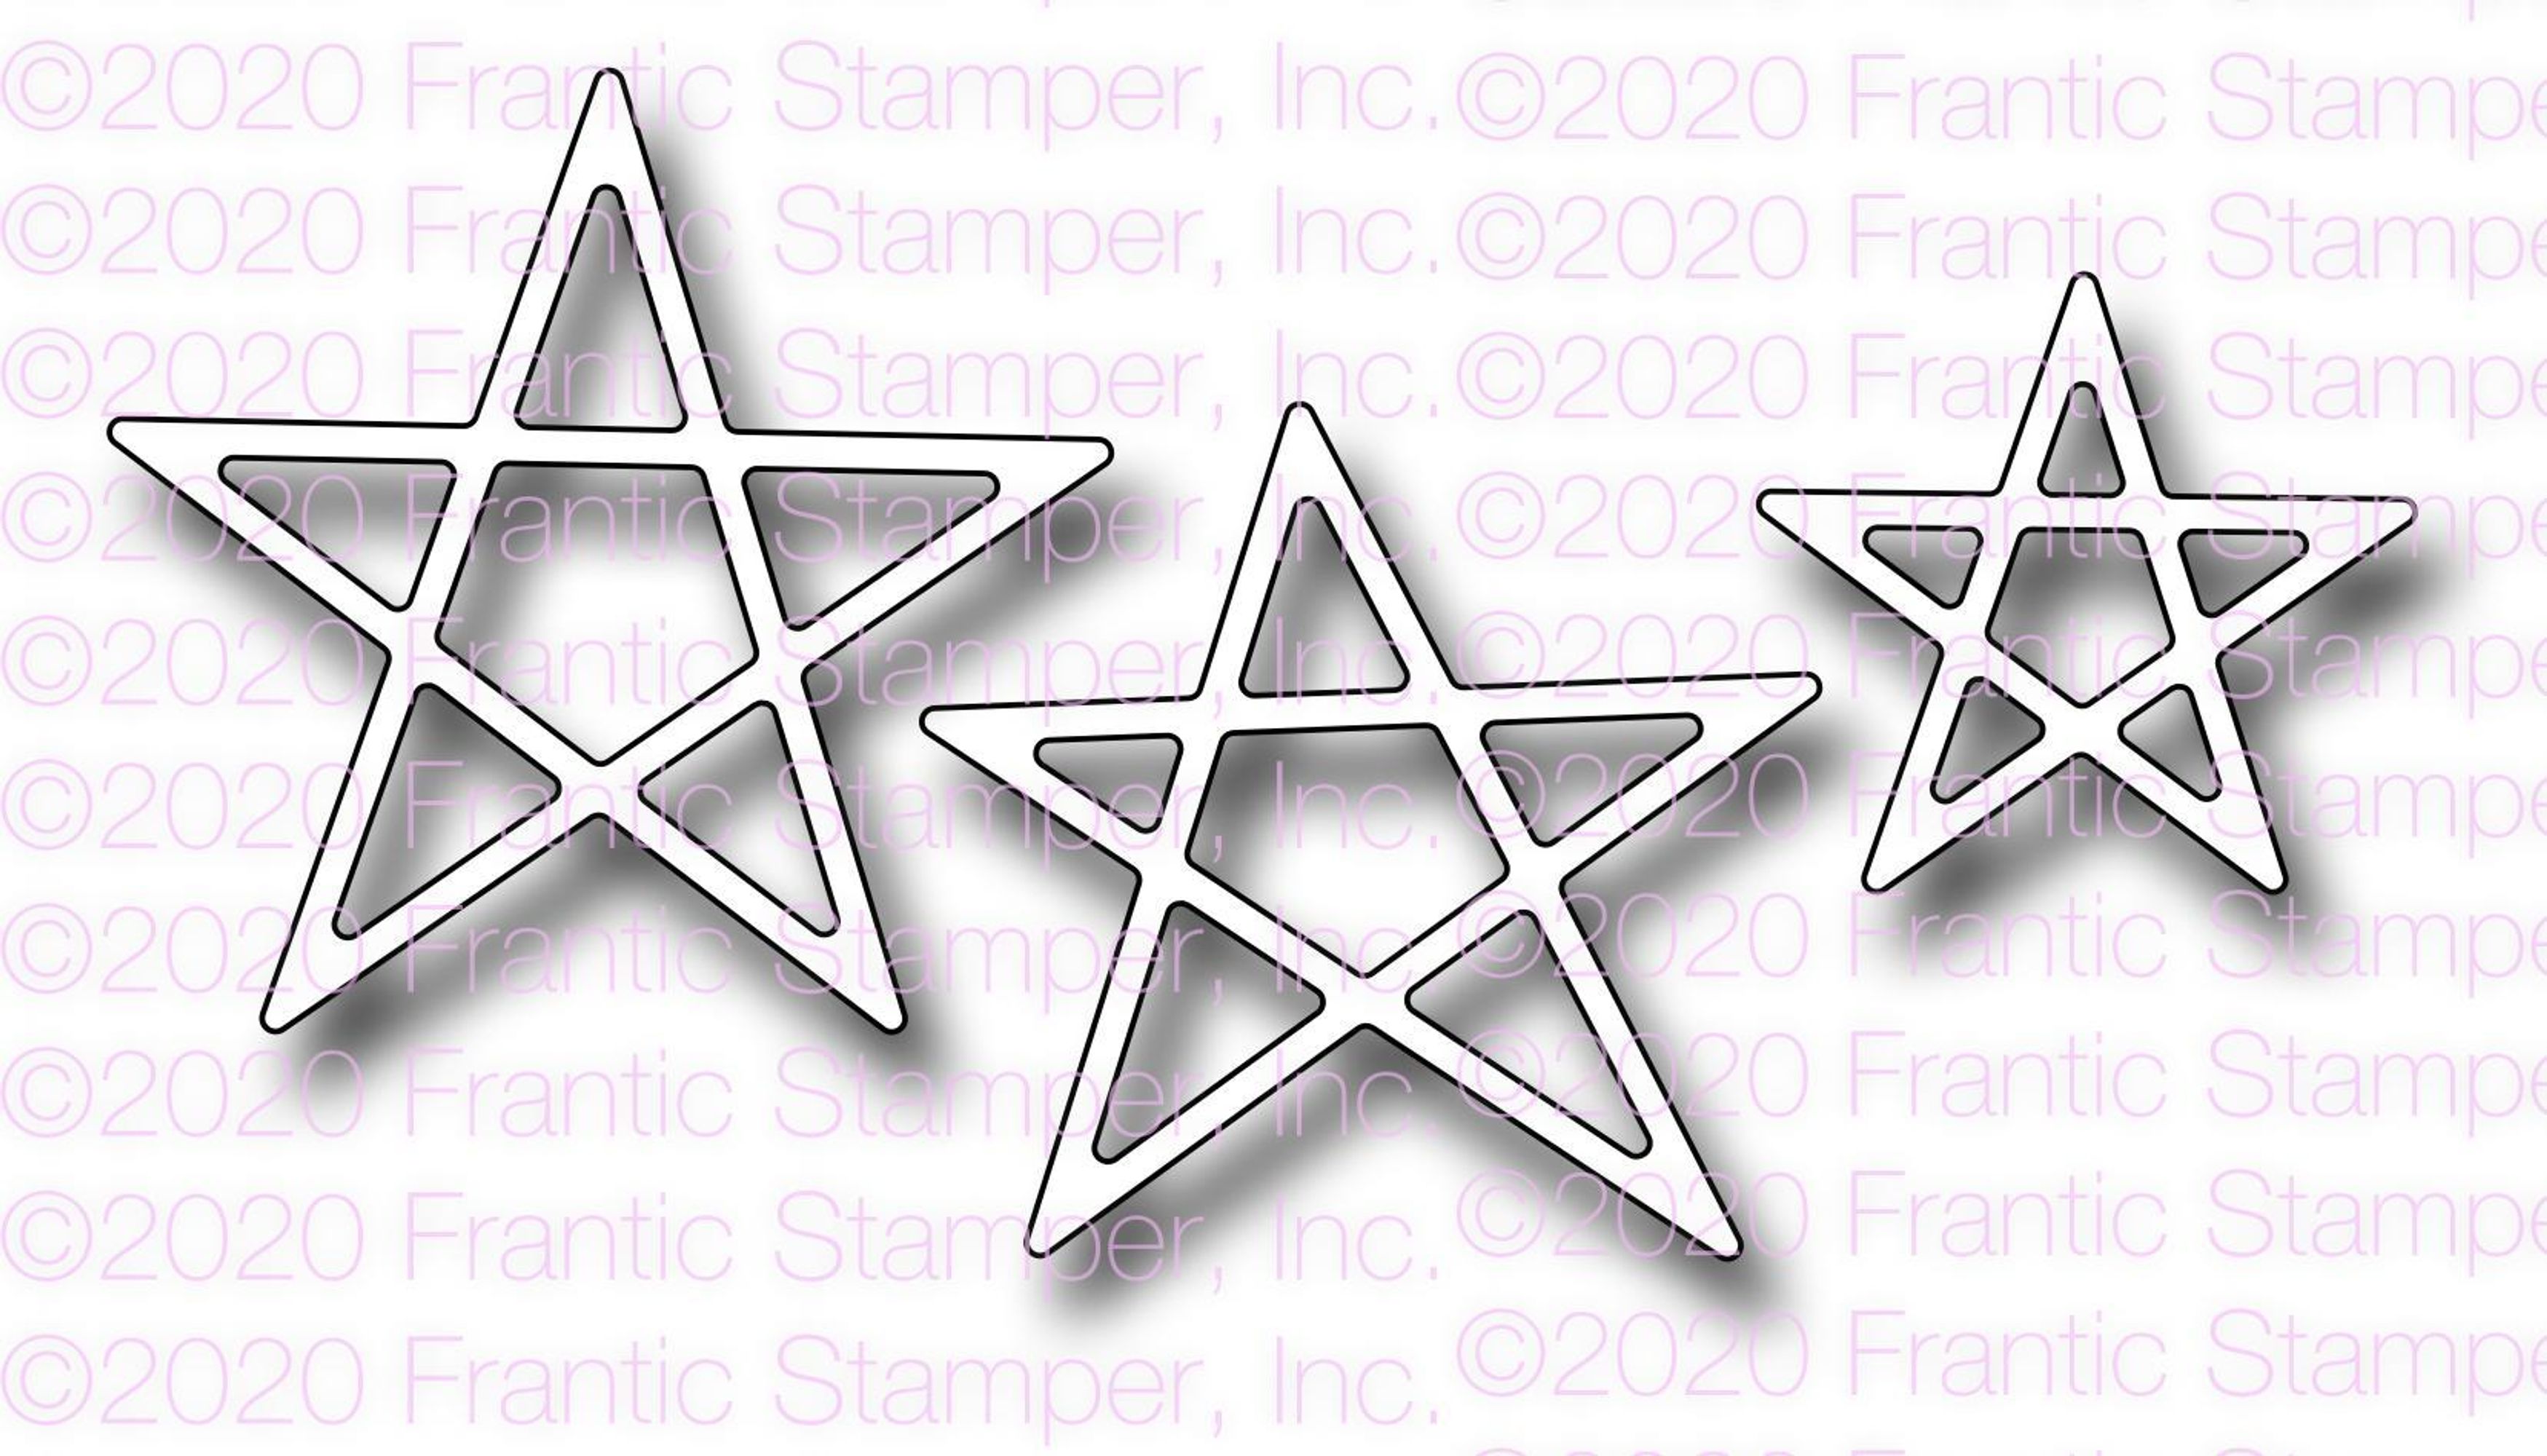 Frantic Stamper Precision Die - Hand-Drawn Stars